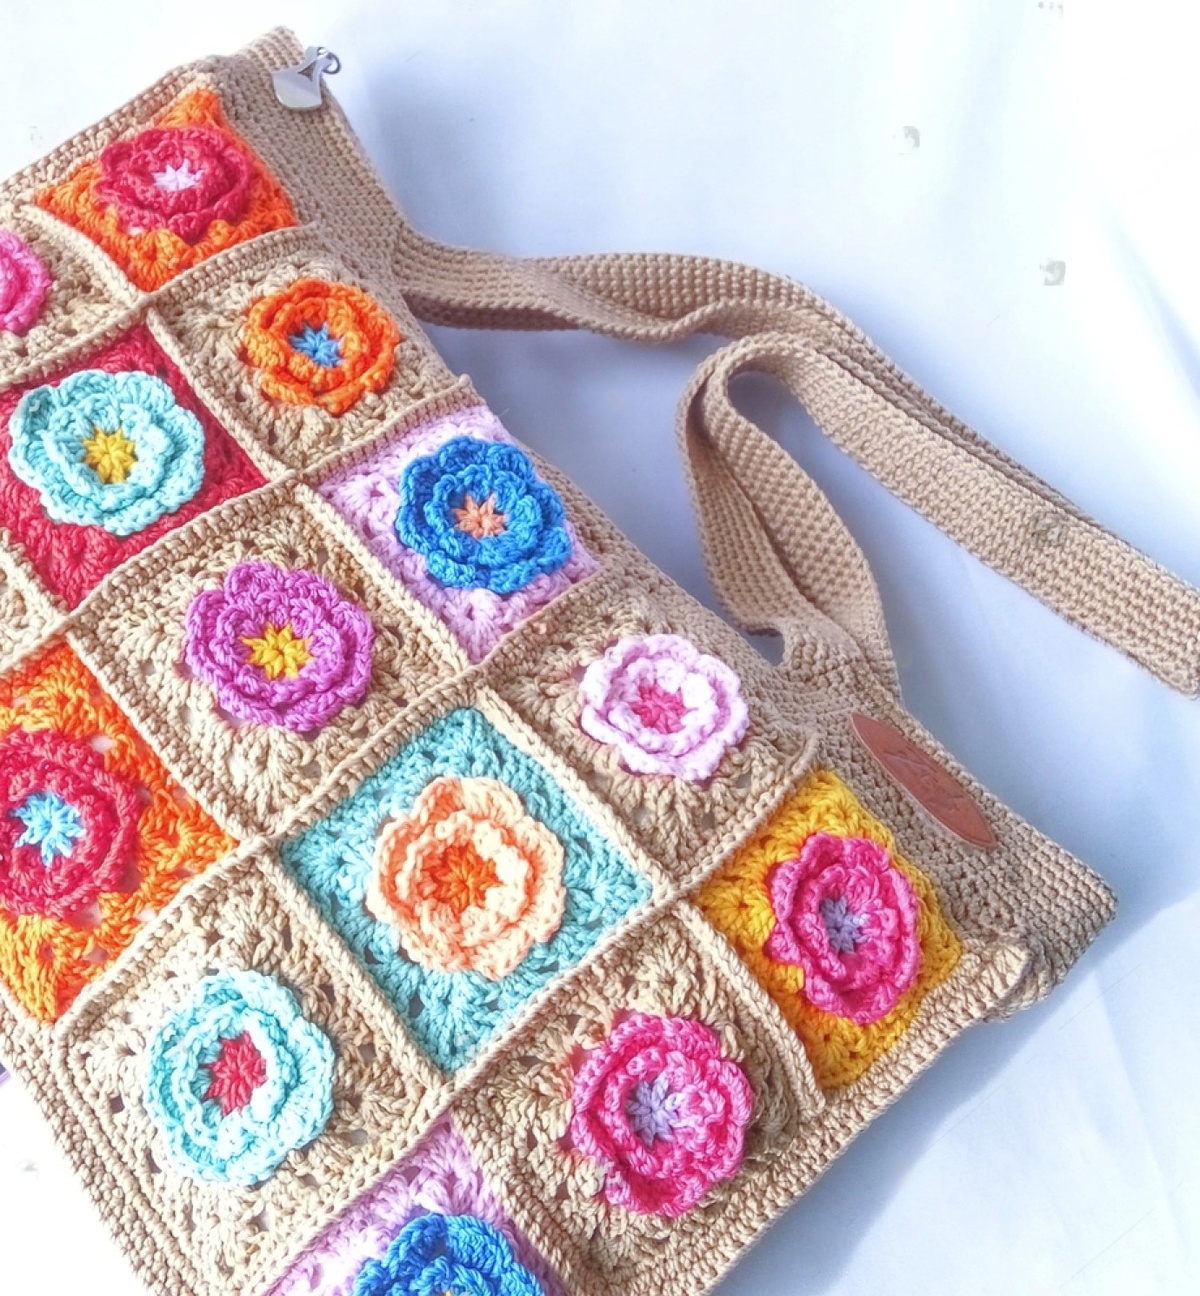 How to Crochet a Granny Square Bag?